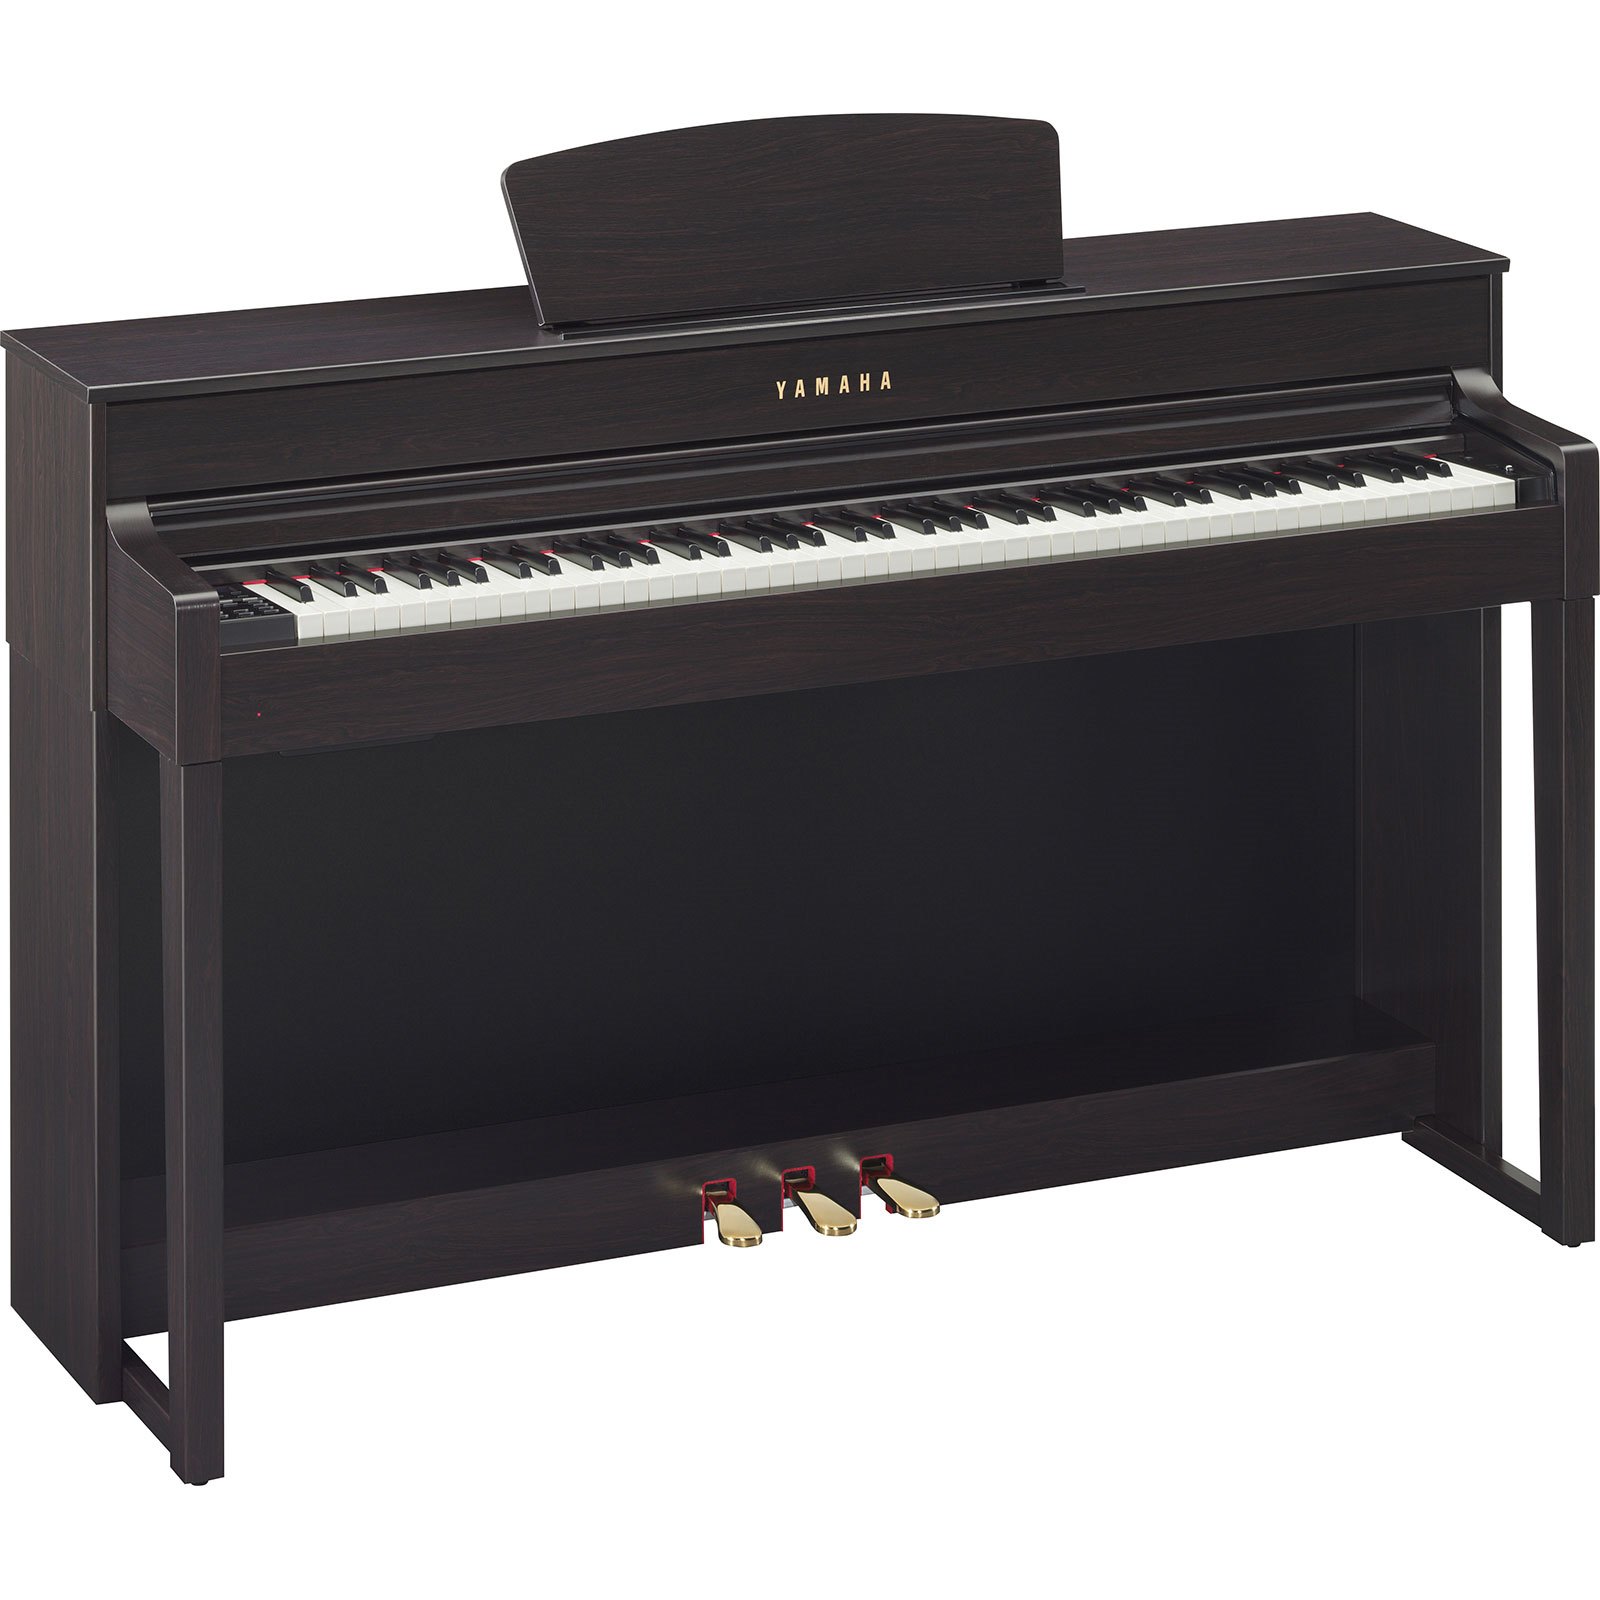 CLP-535 - Features - Clavinova - Pianos - Musical Instruments